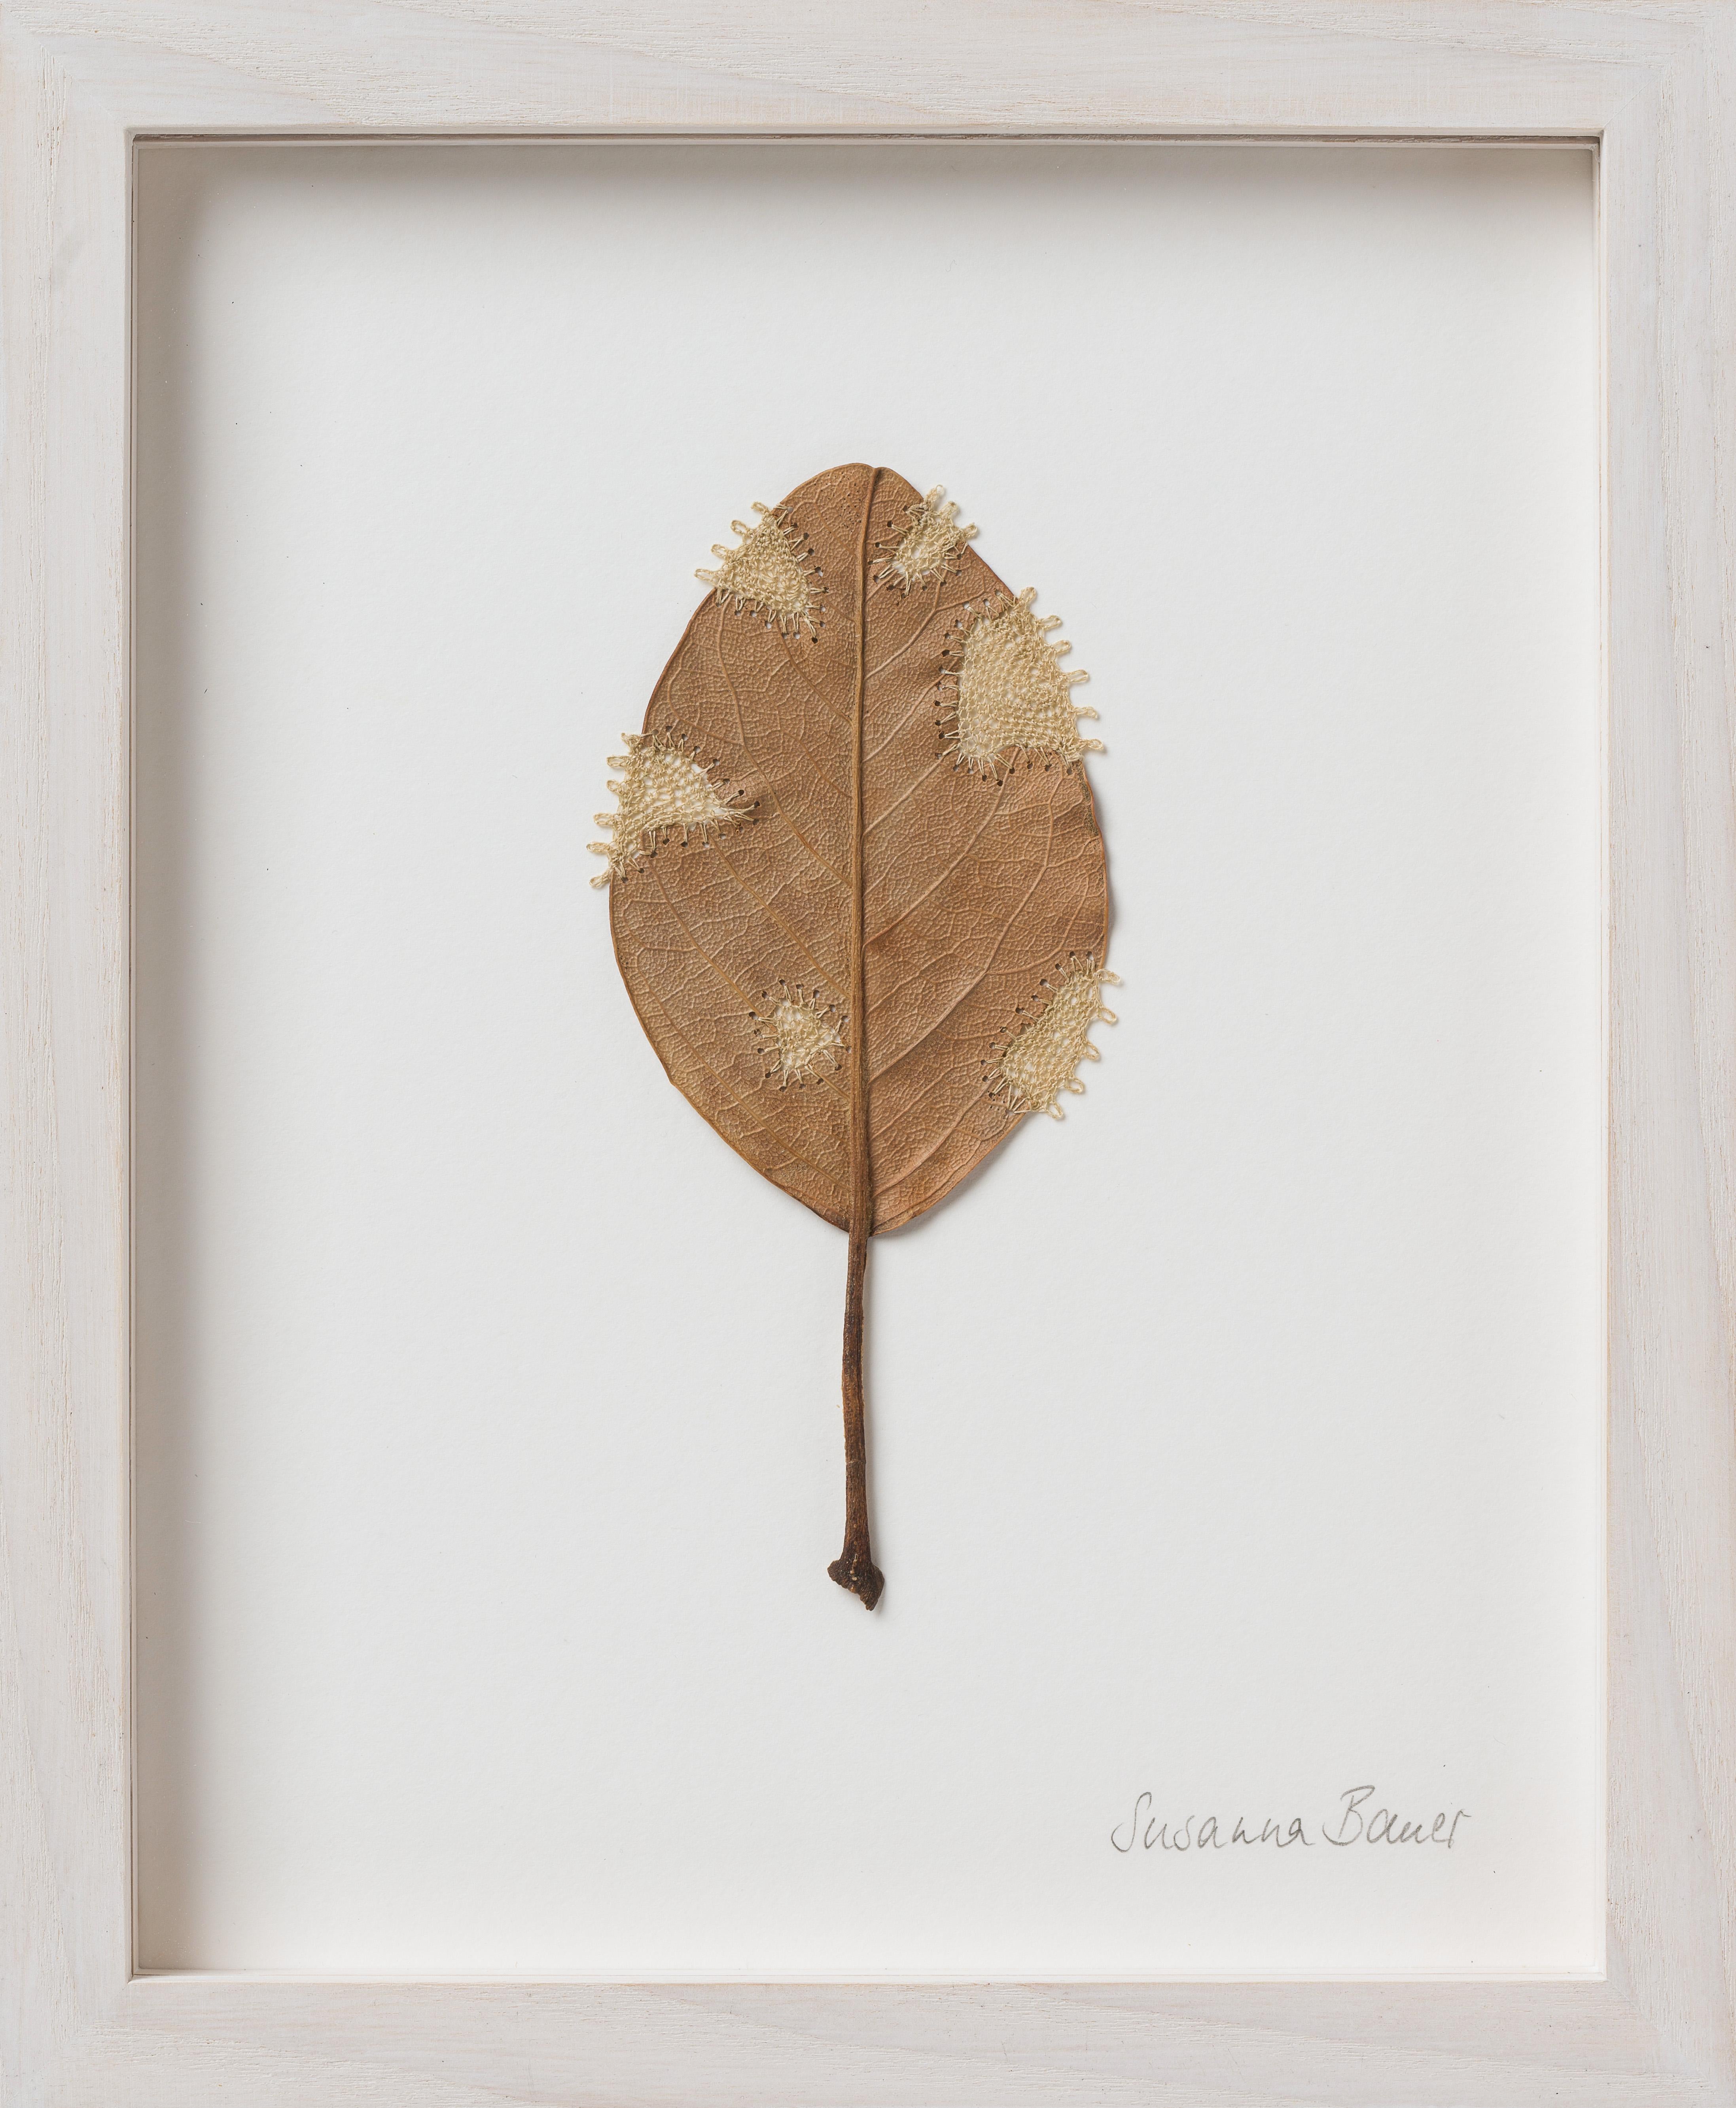 Restoration VII - Intricate contemporary crochet leaf nature art - Mixed Media Art by Susanna Bauer